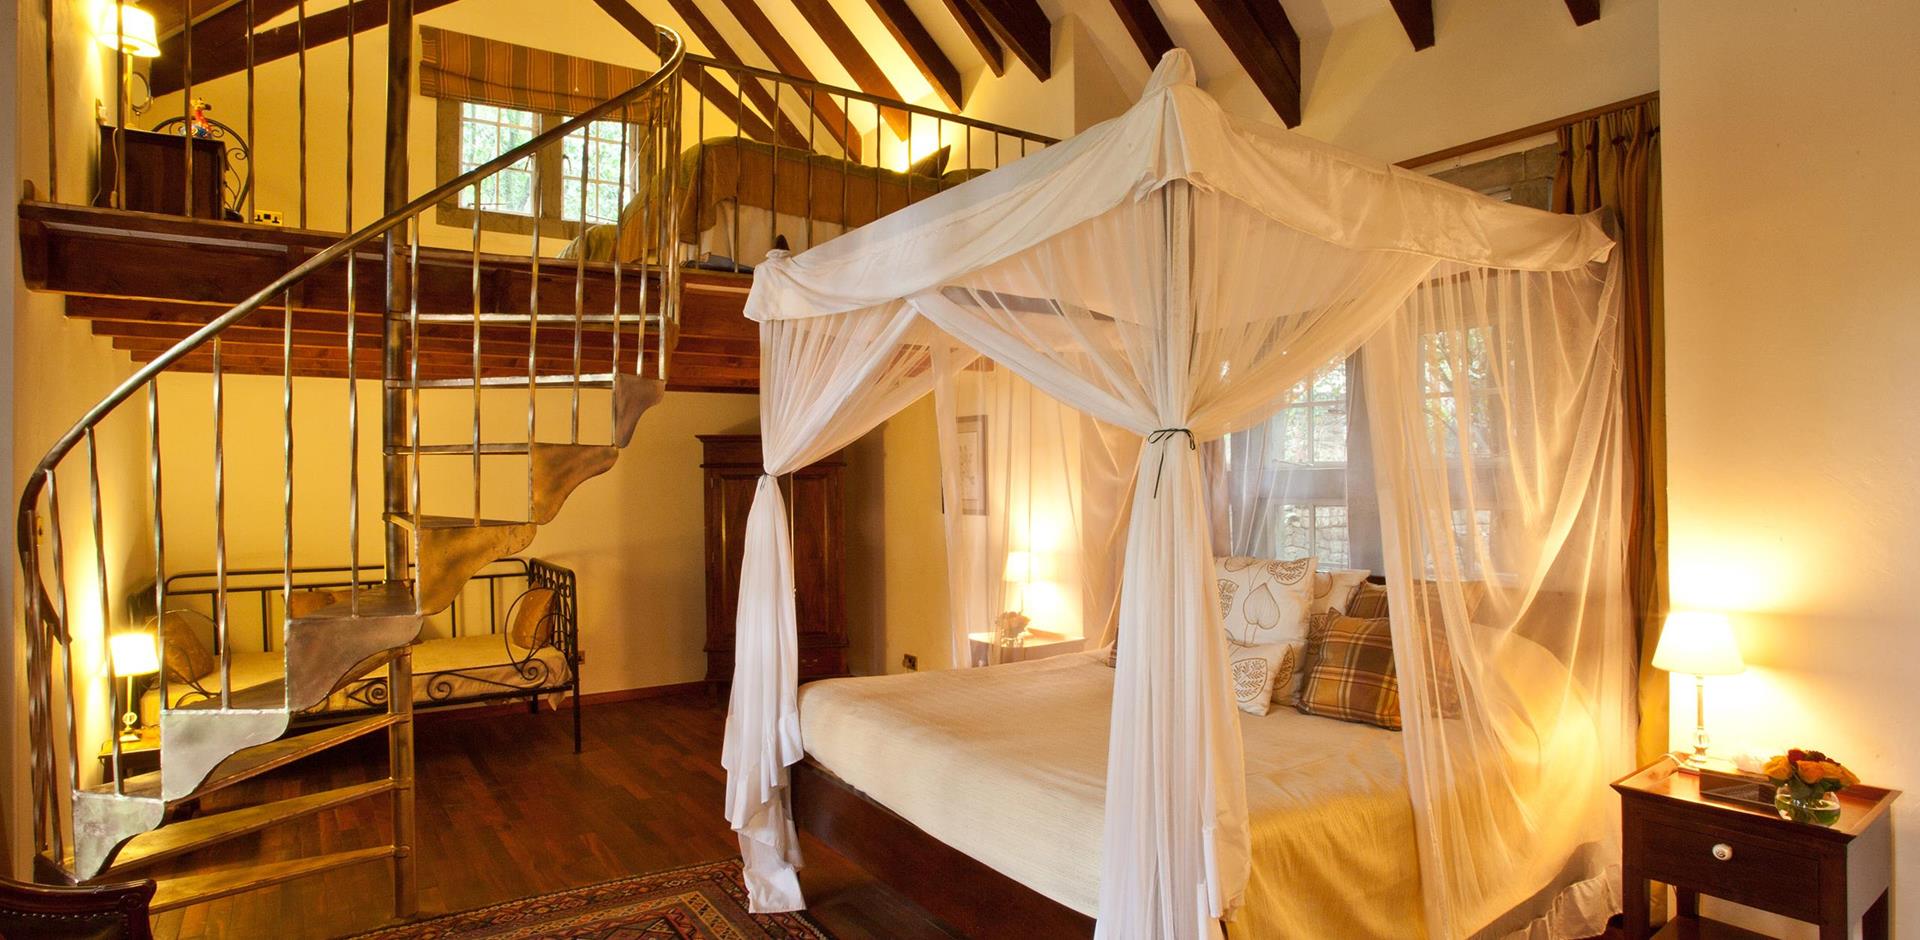 Explore Giraffe Manor, Kenya with Abercrombie & Kent